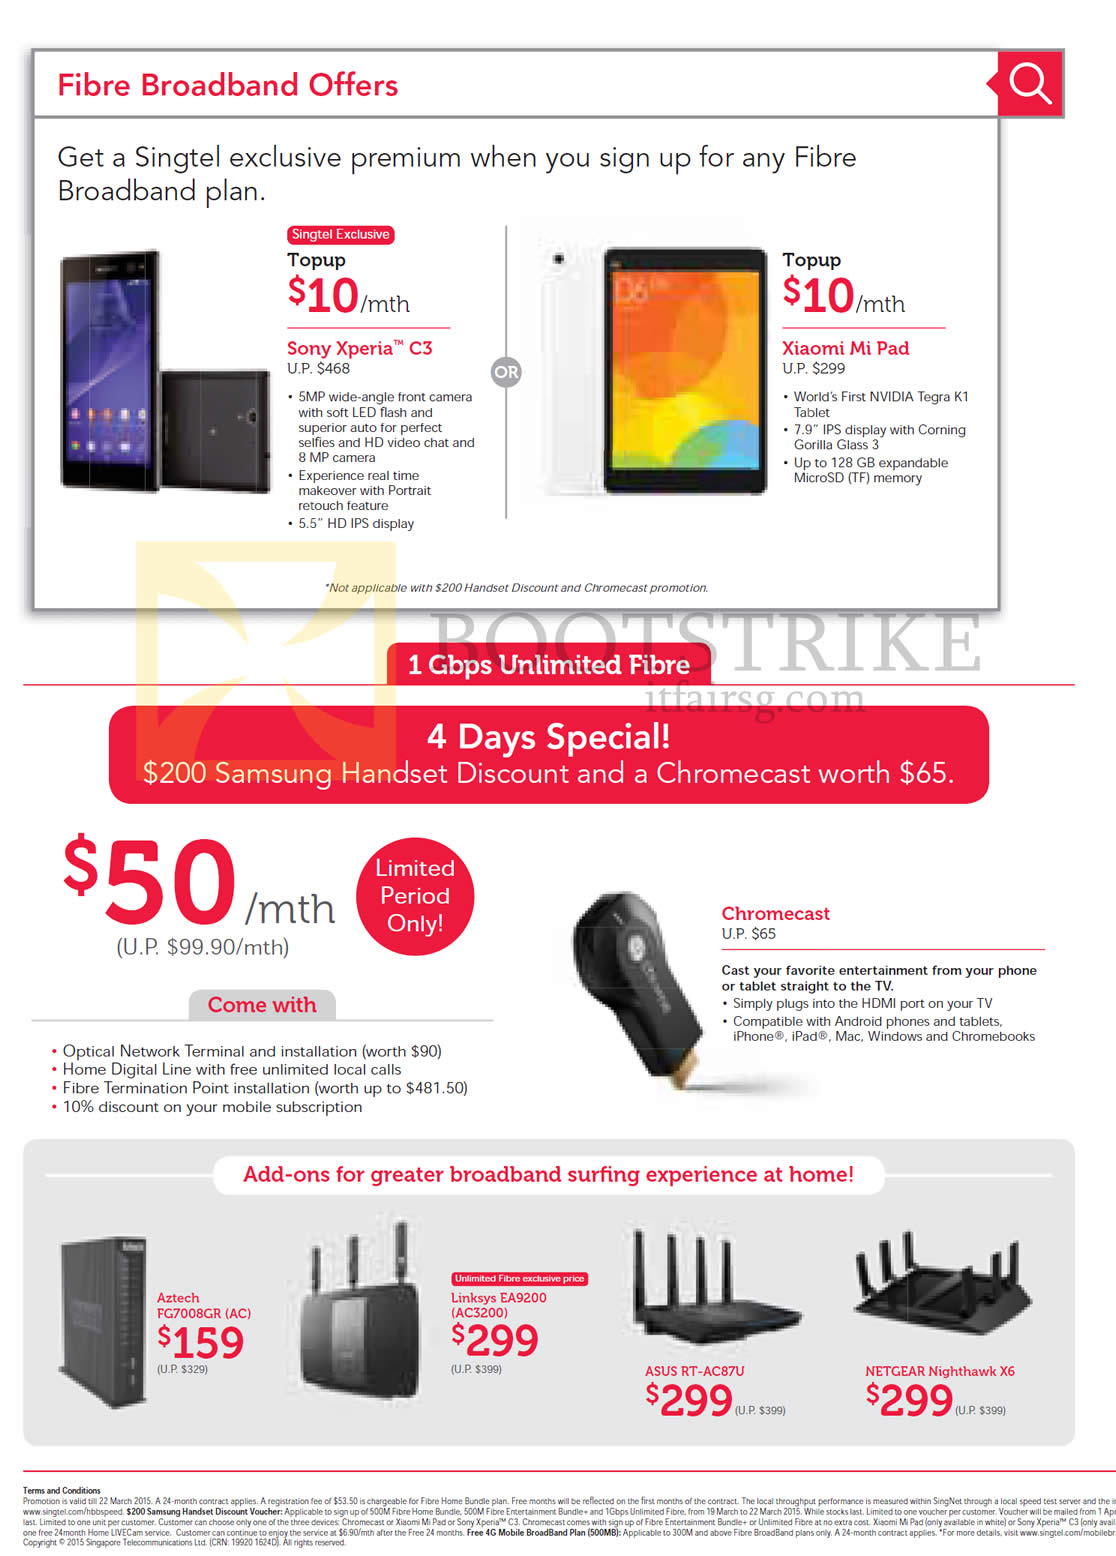 IT SHOW 2015 price list image brochure of Singtel Fibre Broadband, Sony Xperia C3, Xiaomi Mi Pad, 1Gbps Unlimited Fibre, Samsung Handset Discount, Free Chromecast, Add-ons